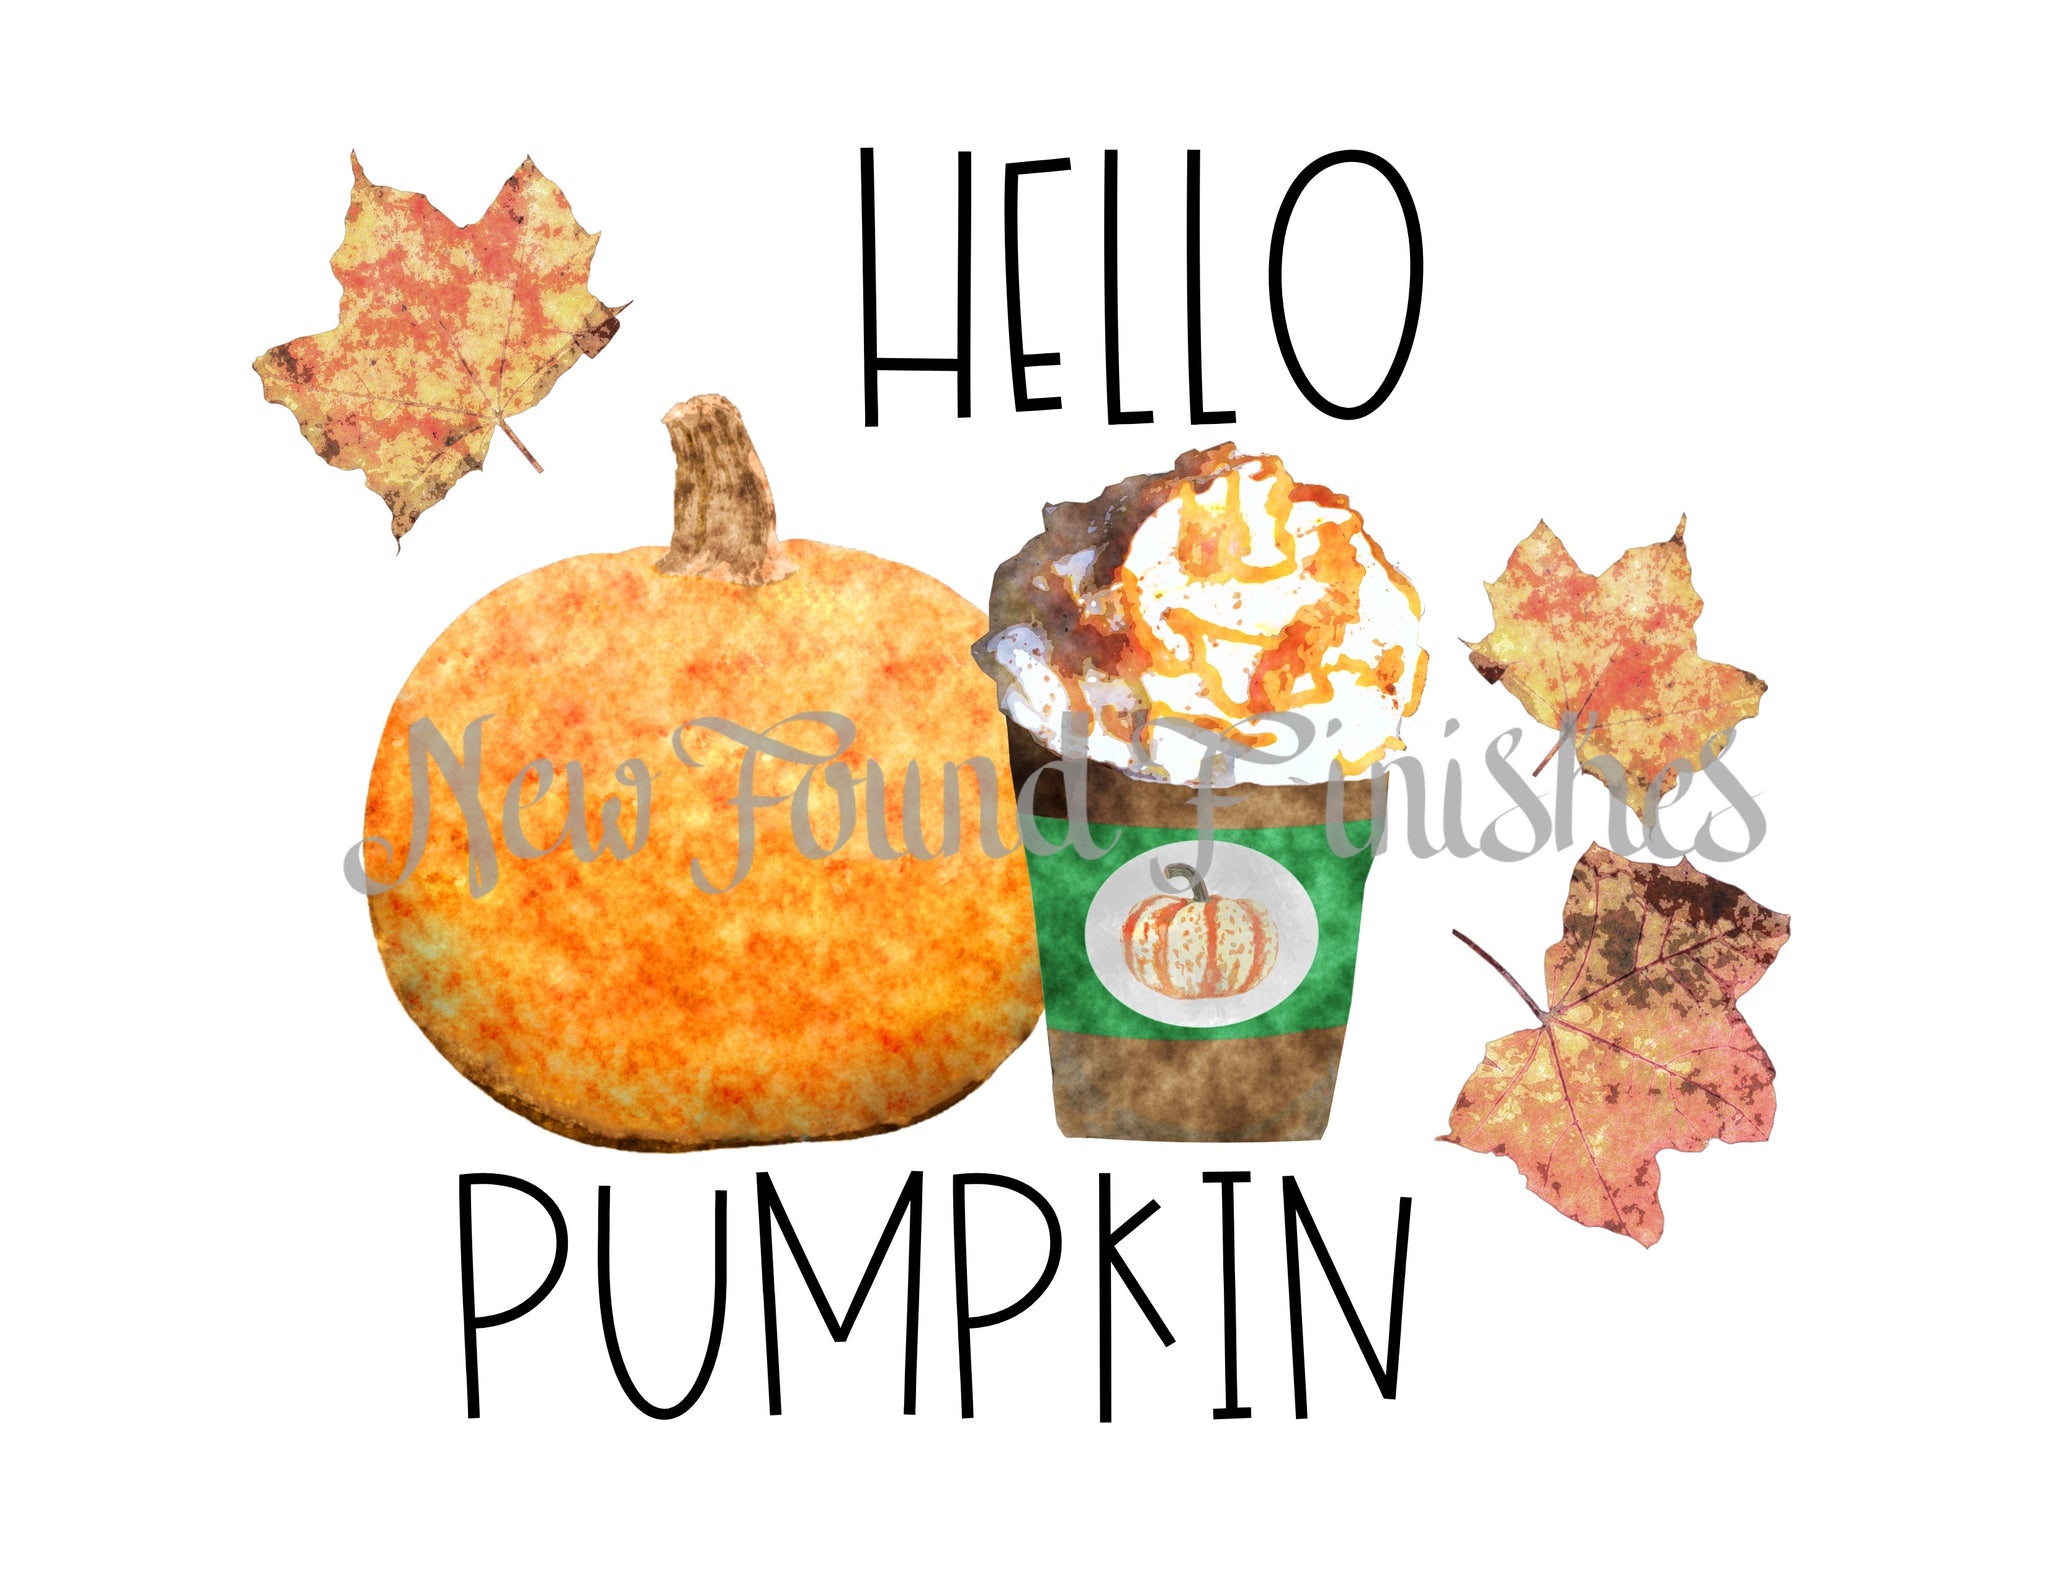 Hello pumpkin